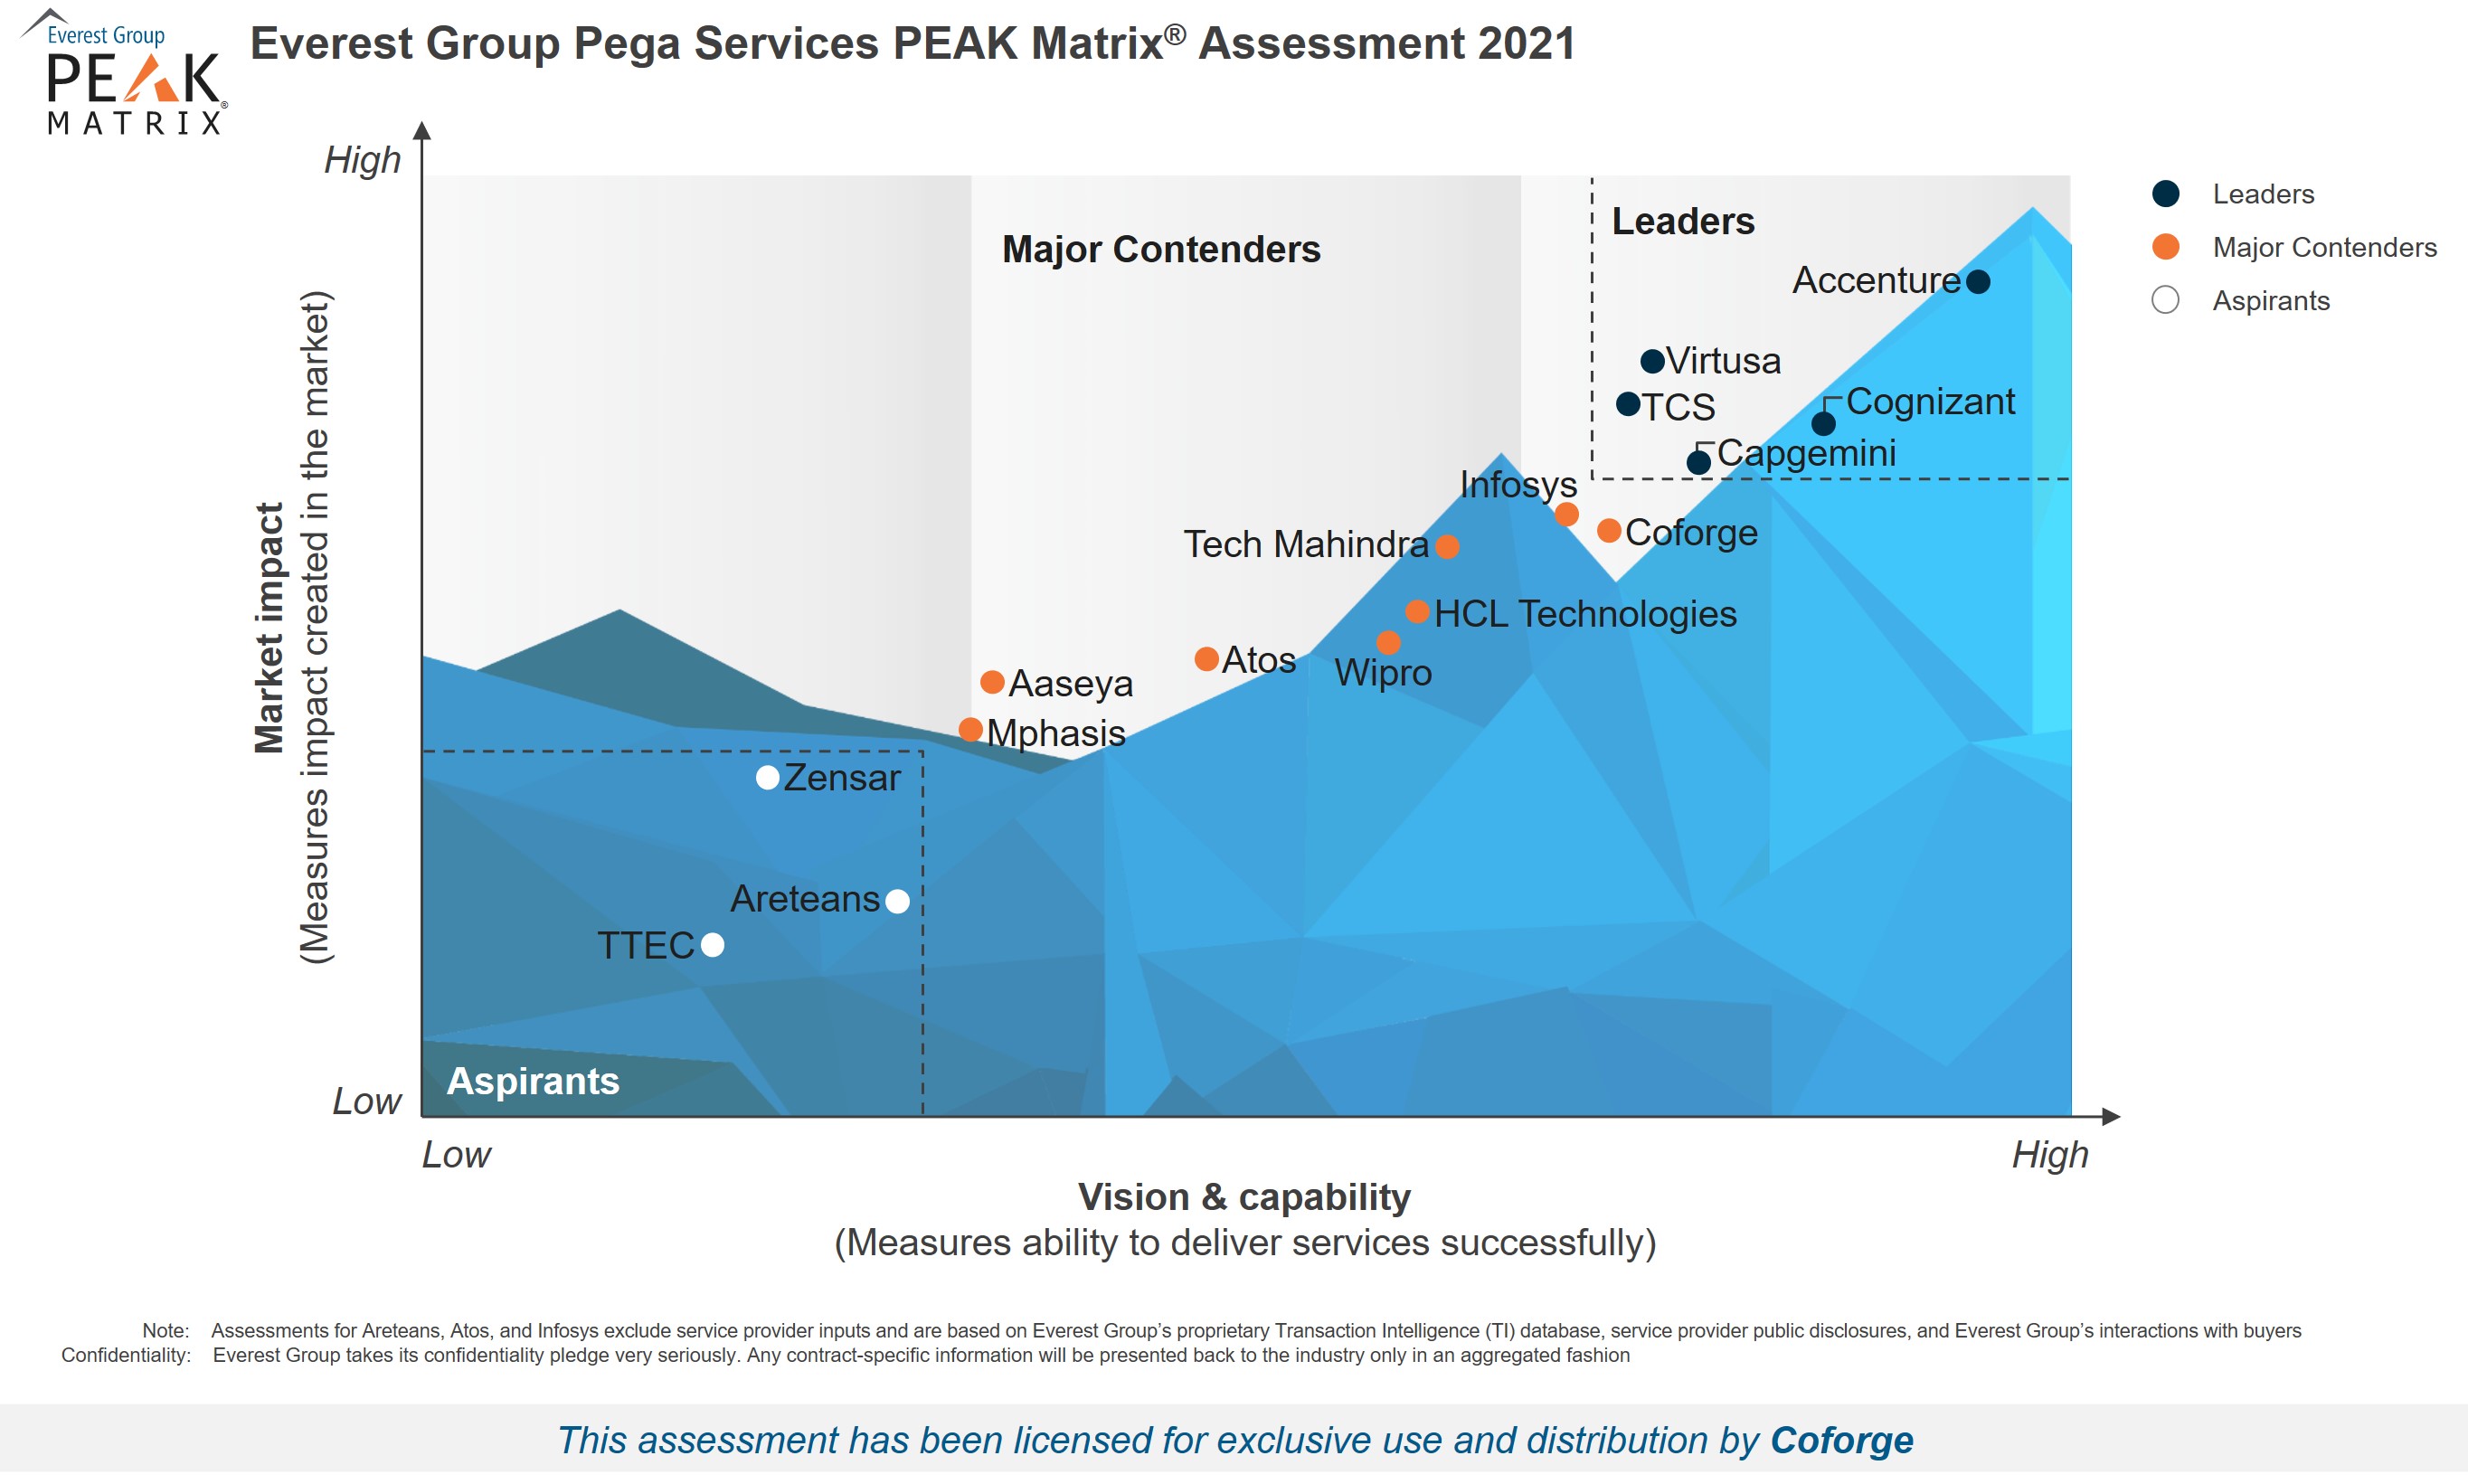 Everest Group PEAK Matrix for Pega Services 2021 - Focus on Coforge